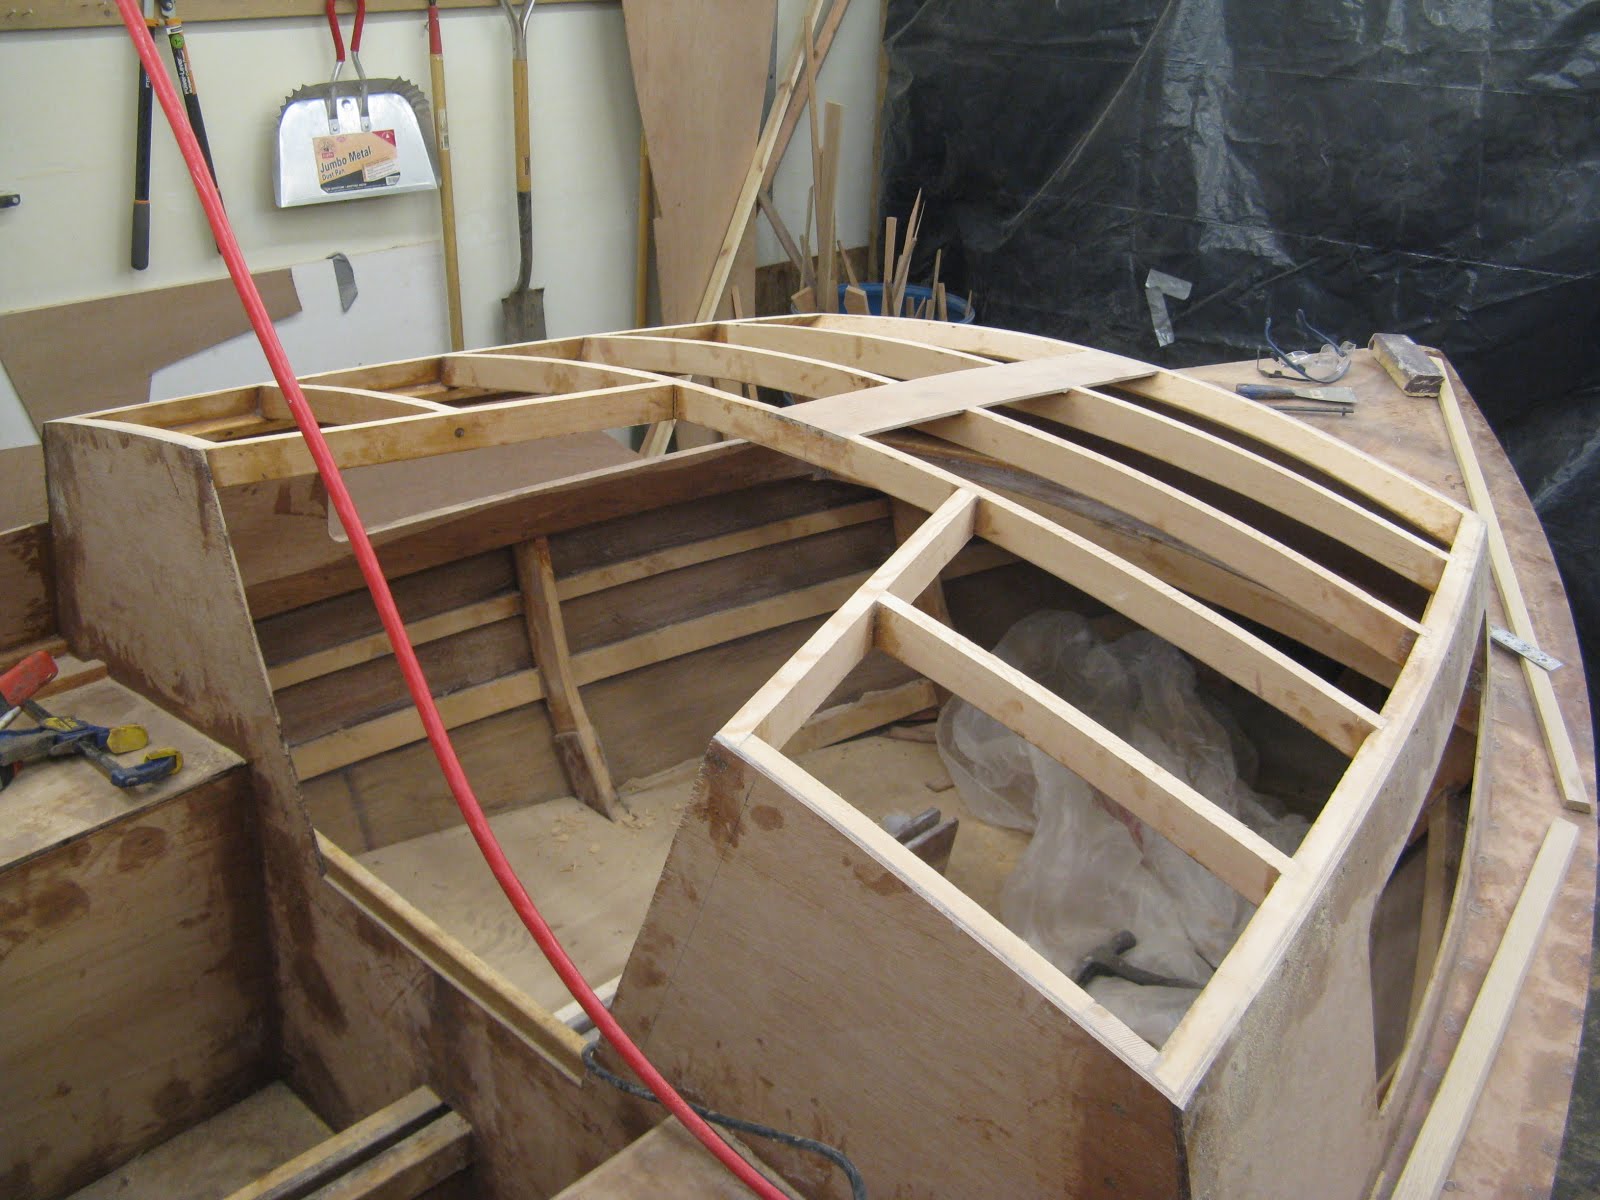 ... Boat Plans Plans PDF Download – DIY Wooden Boat Plans Projects